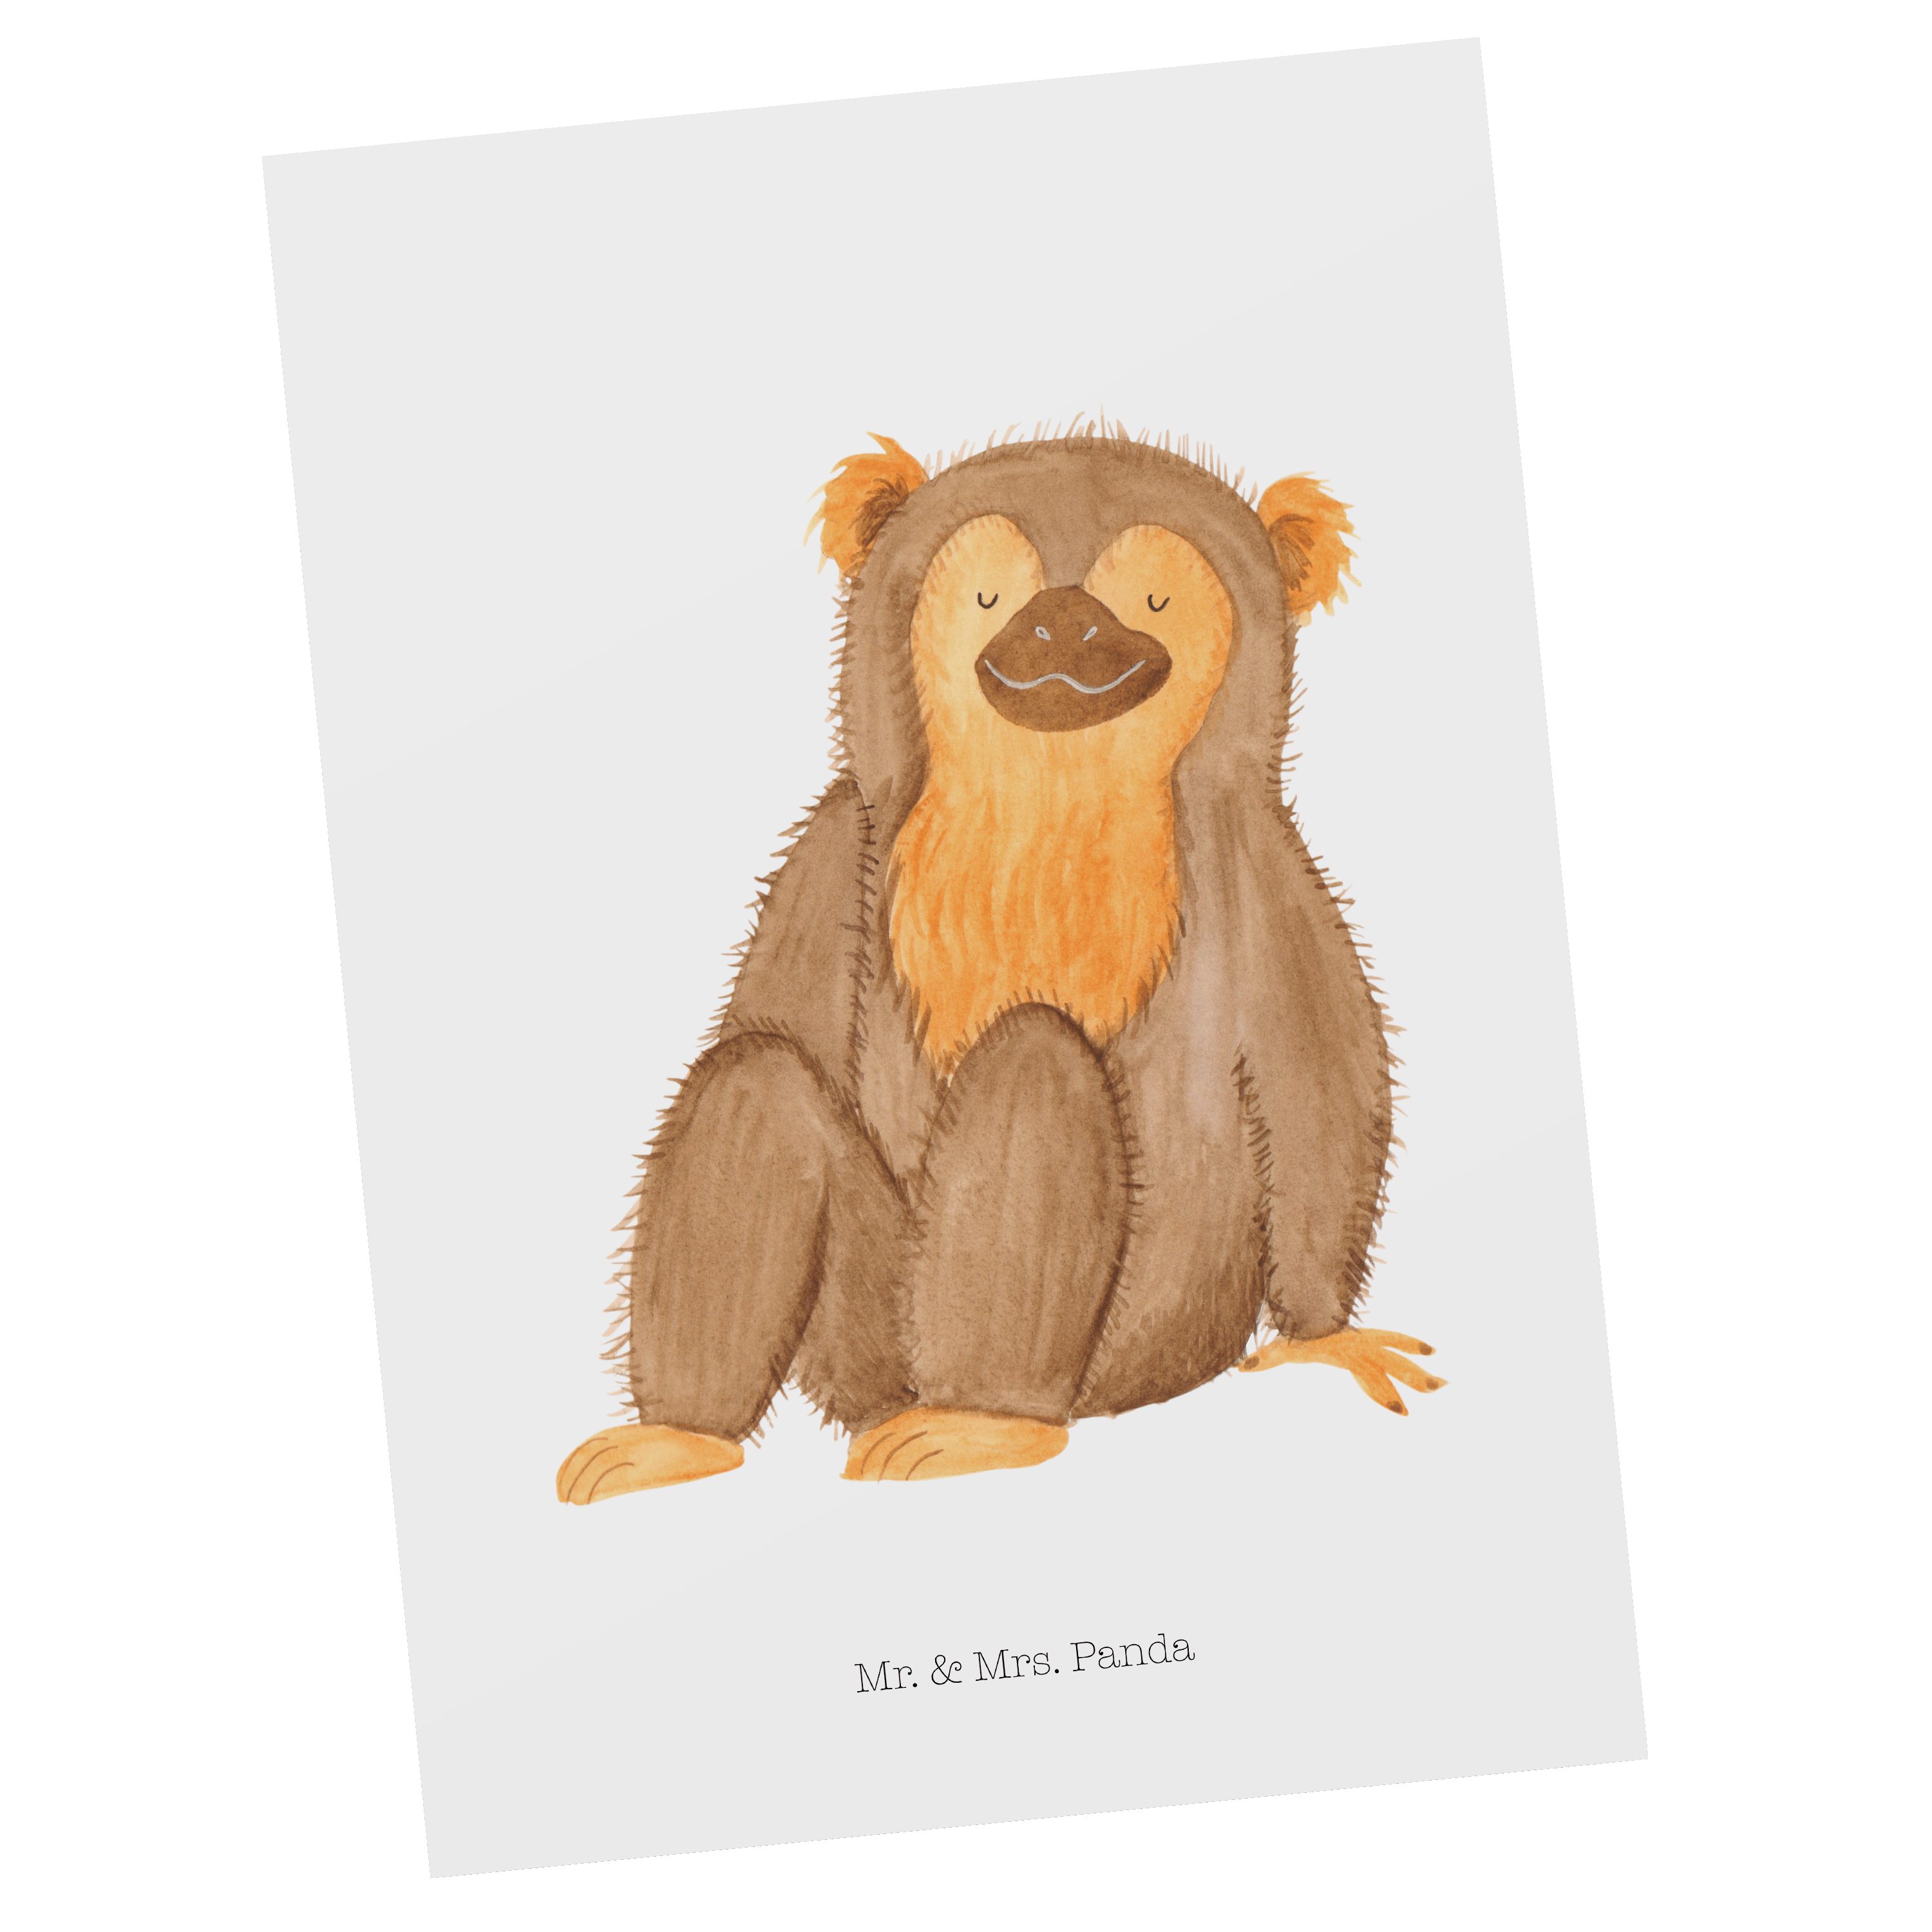 Mr. & Mrs. Panda Postkarte Affe - Weiß - Geschenk, Grußkarte, Dankeskarte, Respekt, Wildtiere, K